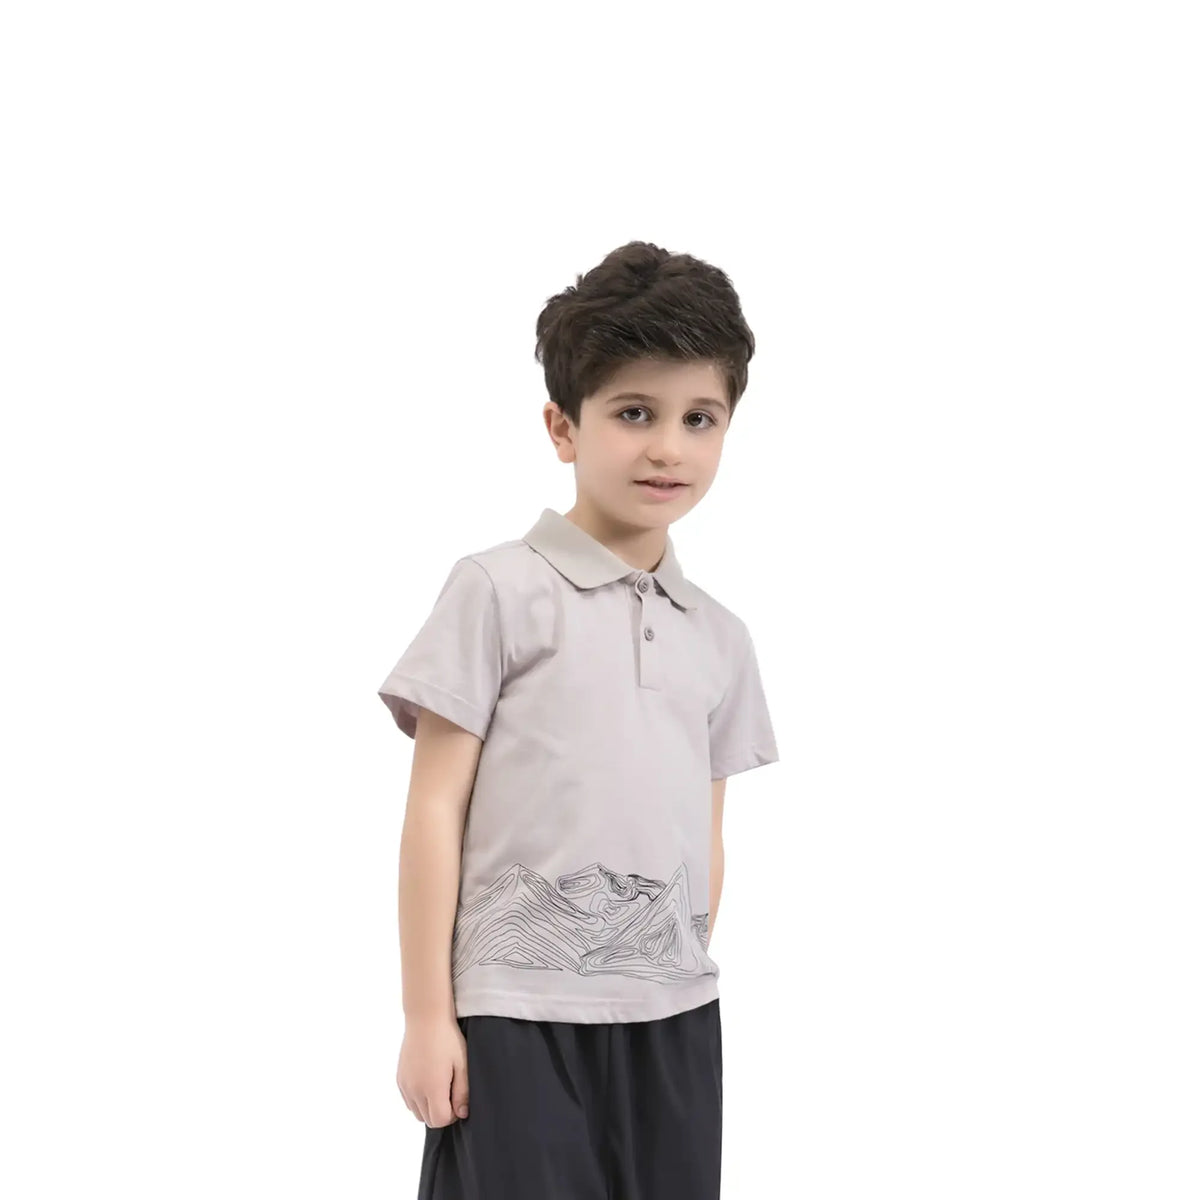 Printed Casual Polo Shirt For Boys